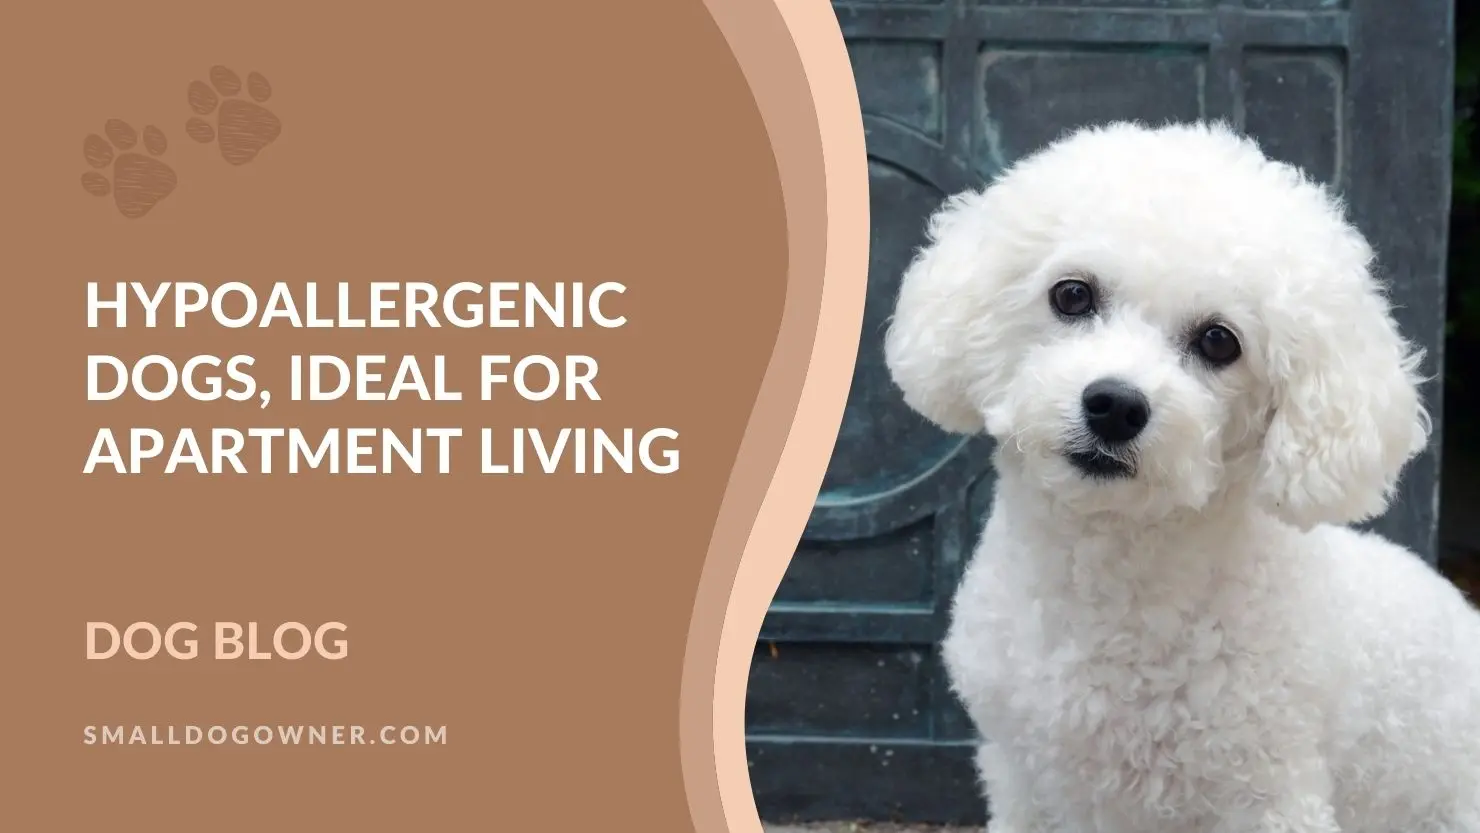 Hypoallergenic apartment dogs